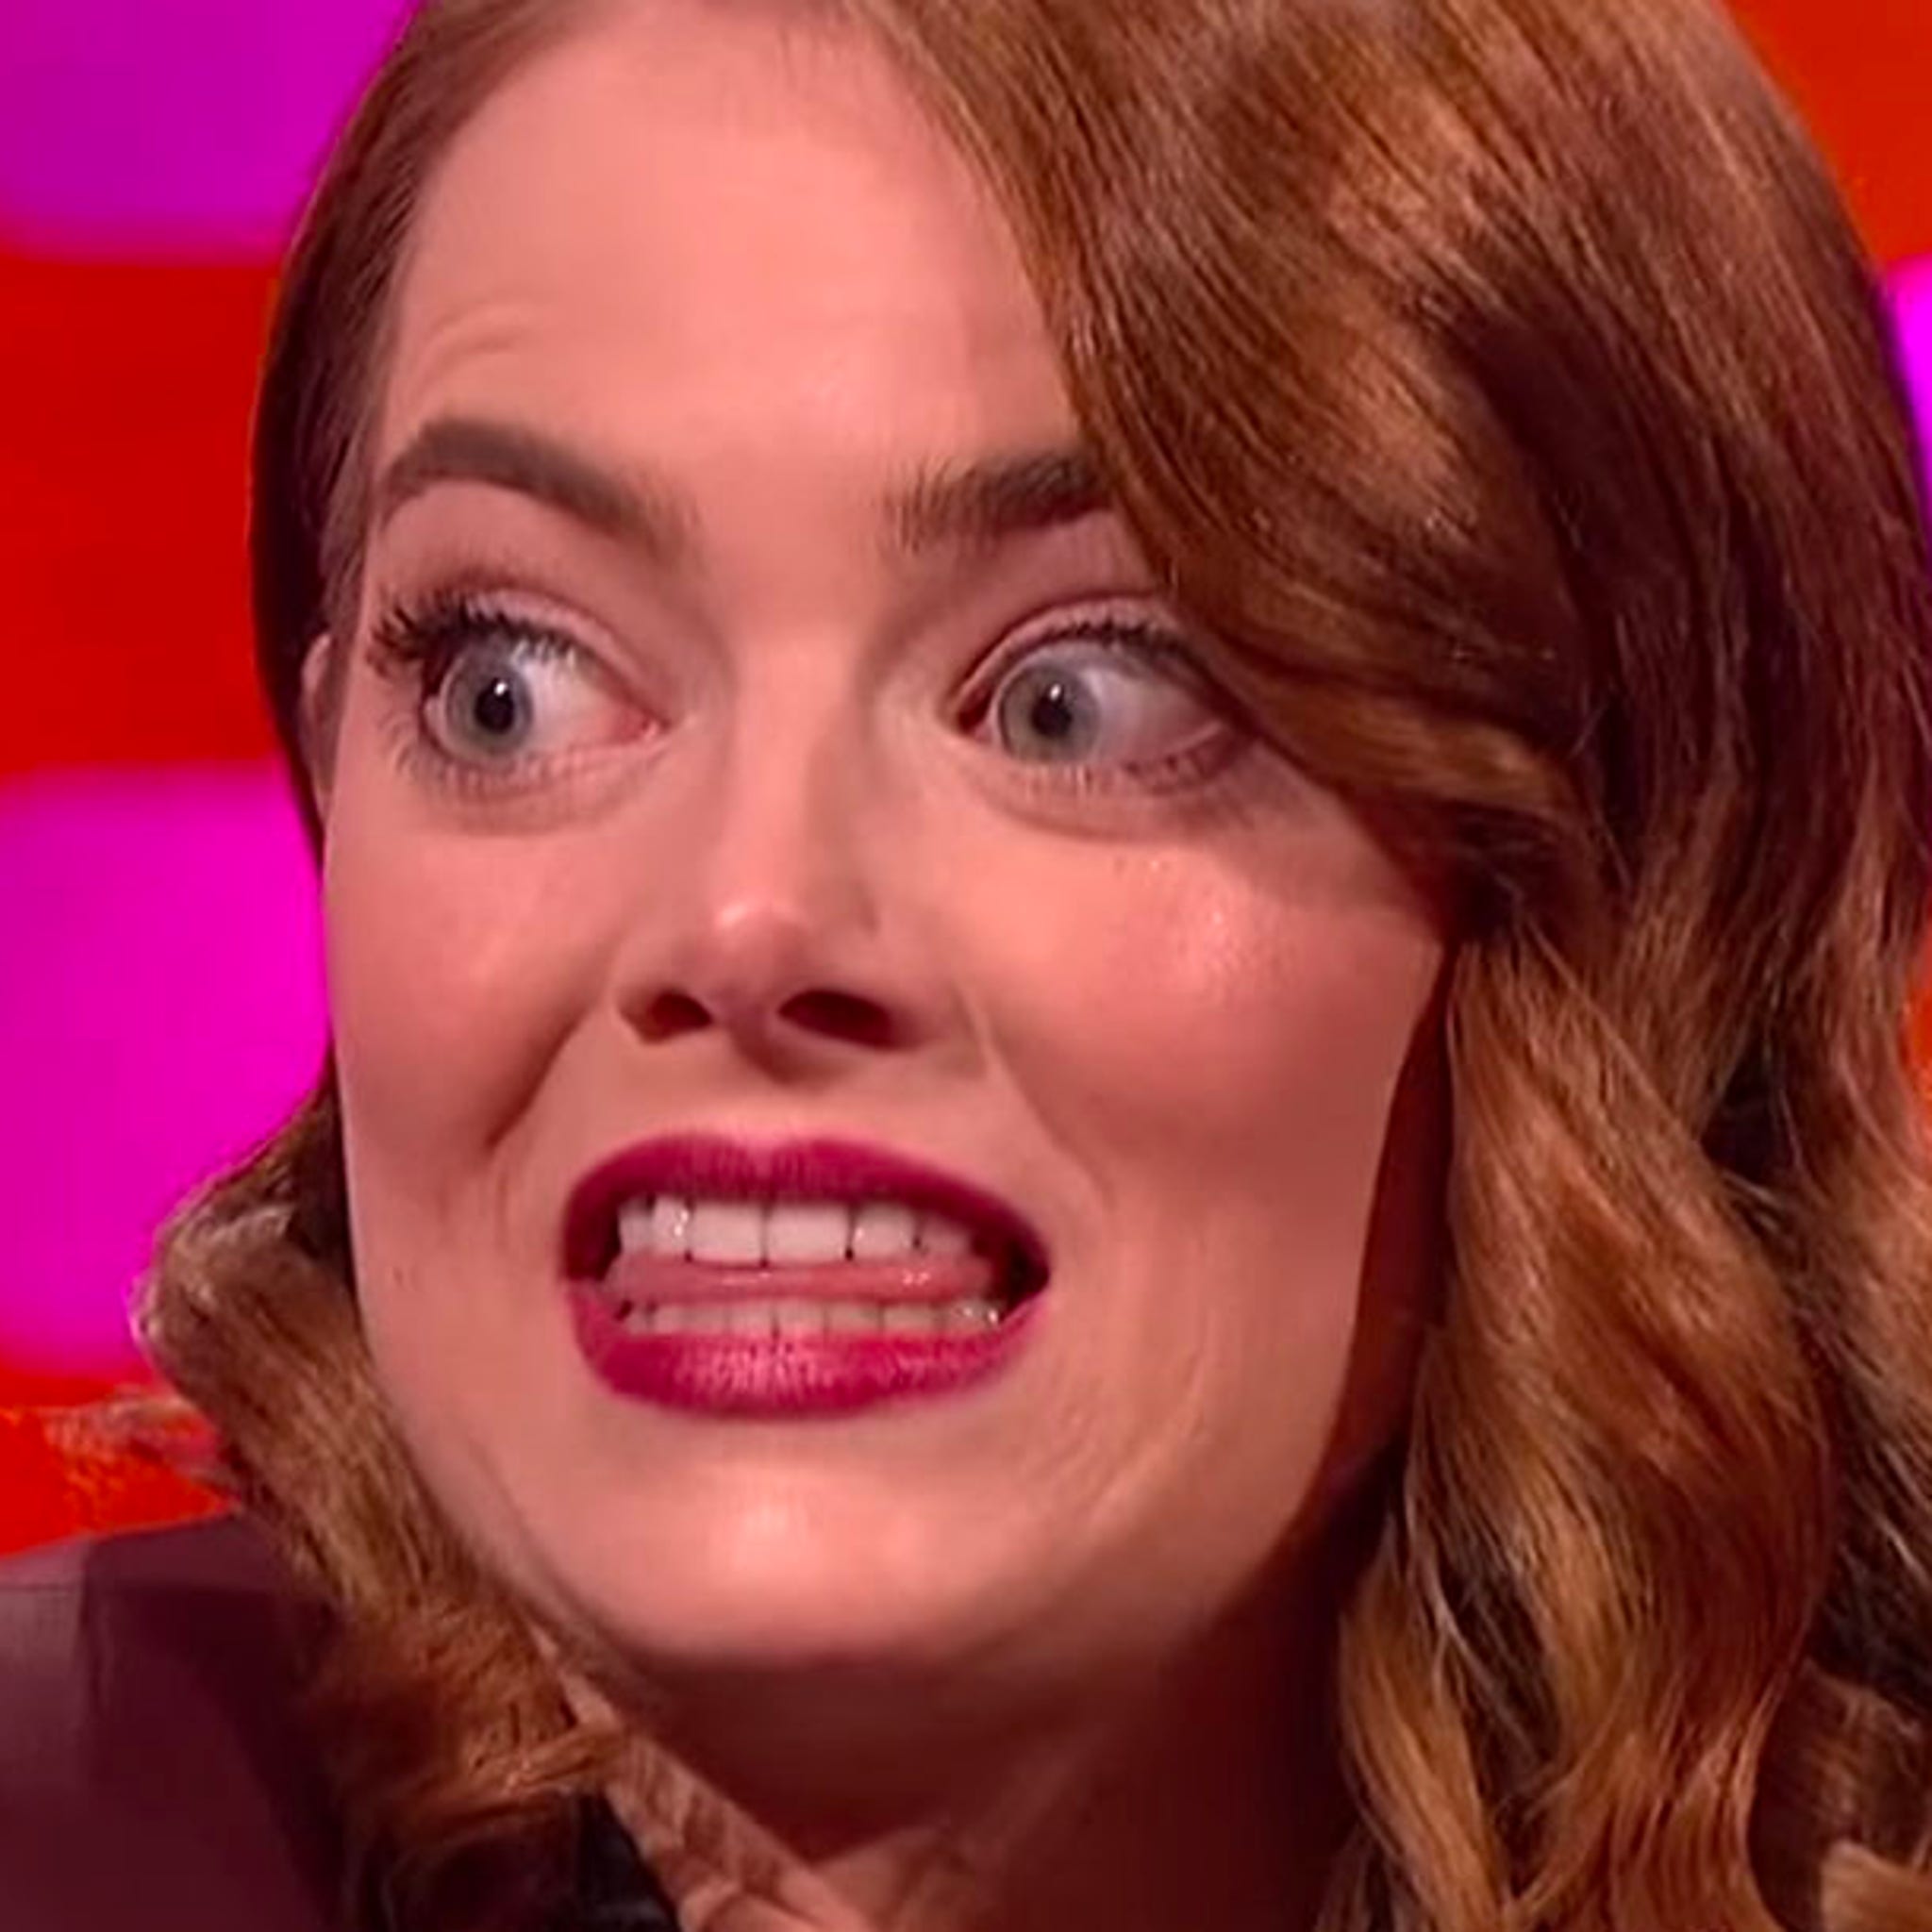 Emma Stone Had Meltdown Filming Crazy, Stupid, Love